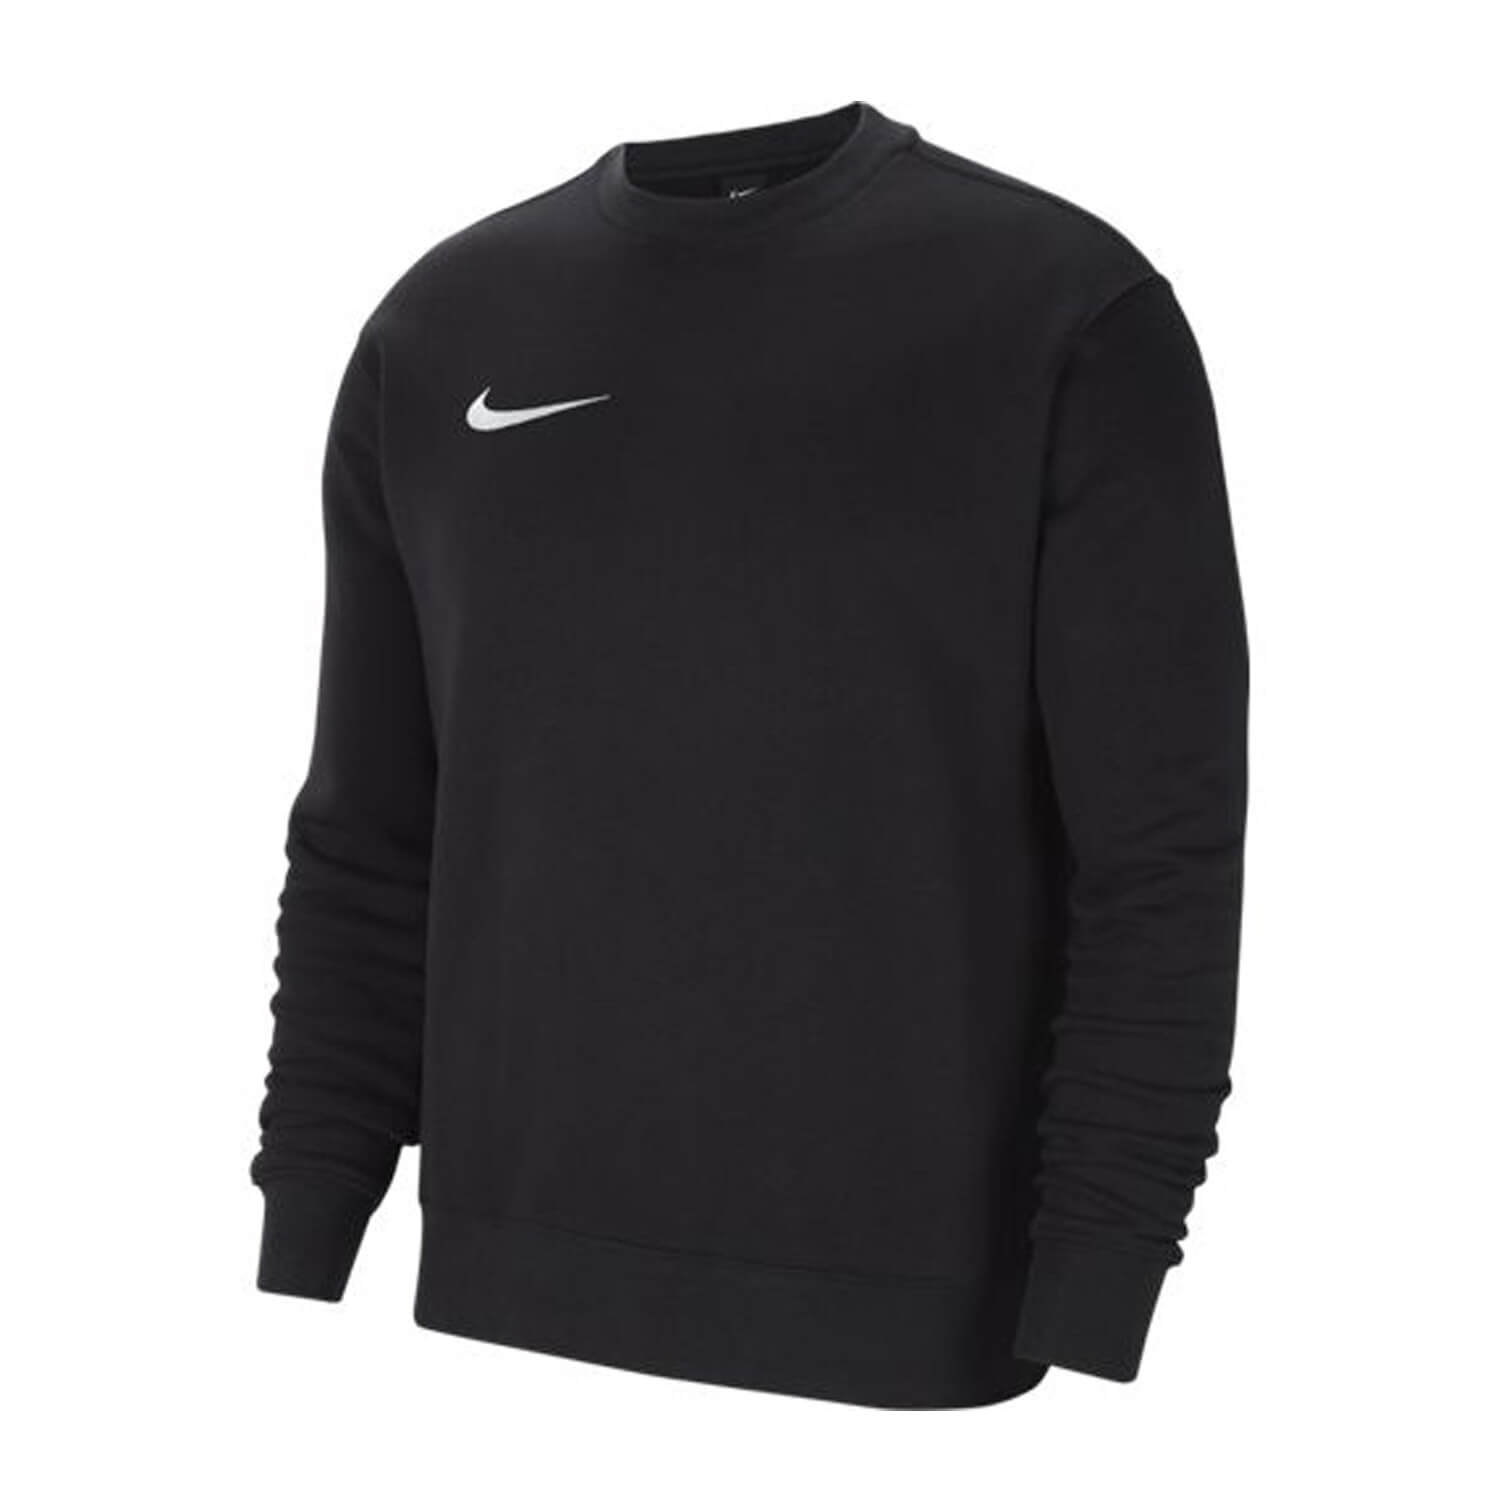 Nike Team Park 20 Crewneck Lacivert Erkek Sweatshirt - CW6902-451